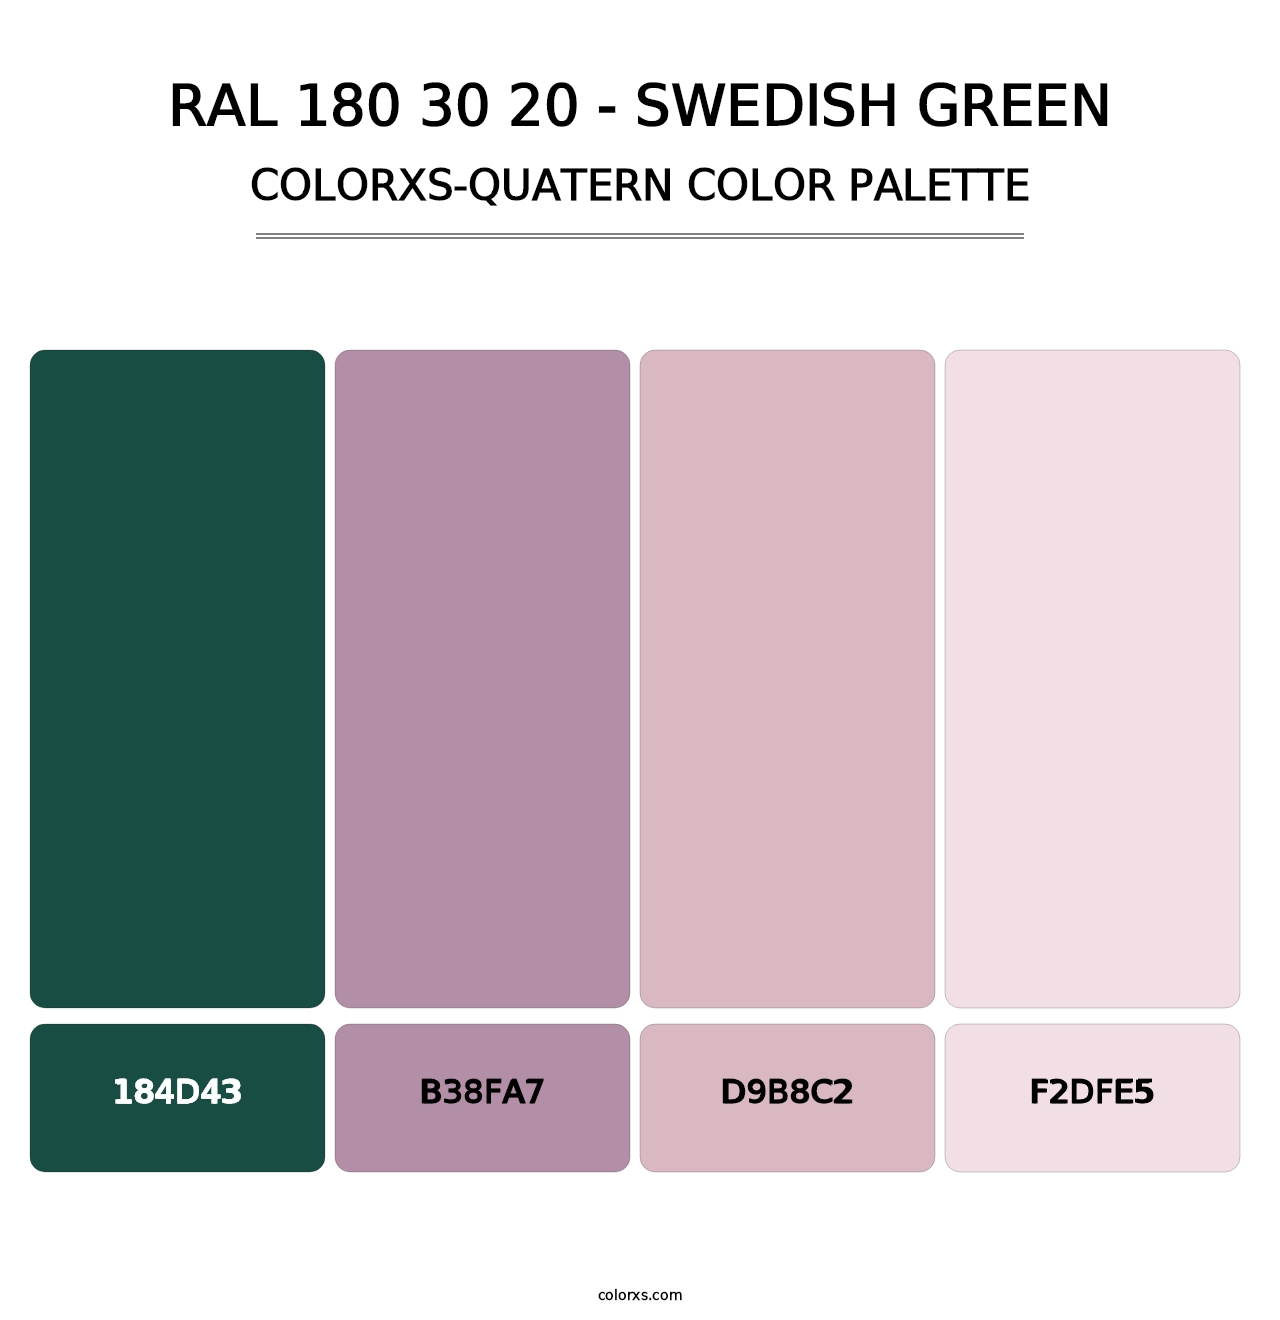 RAL 180 30 20 - Swedish Green - Colorxs Quatern Palette